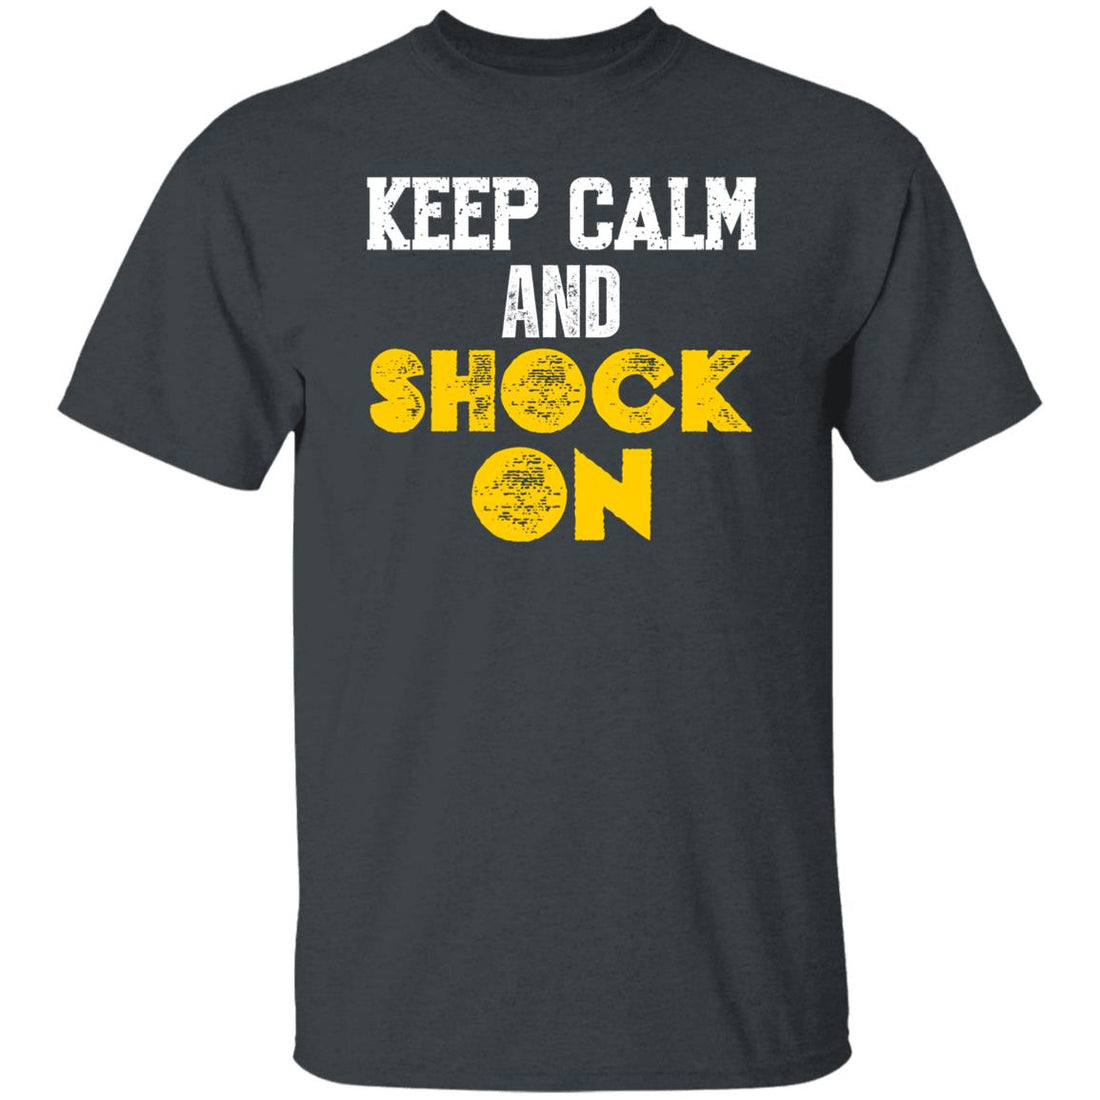 Keep Calm Shock T-Shirt - T-Shirts - Positively Sassy - Keep Calm Shock T-Shirt